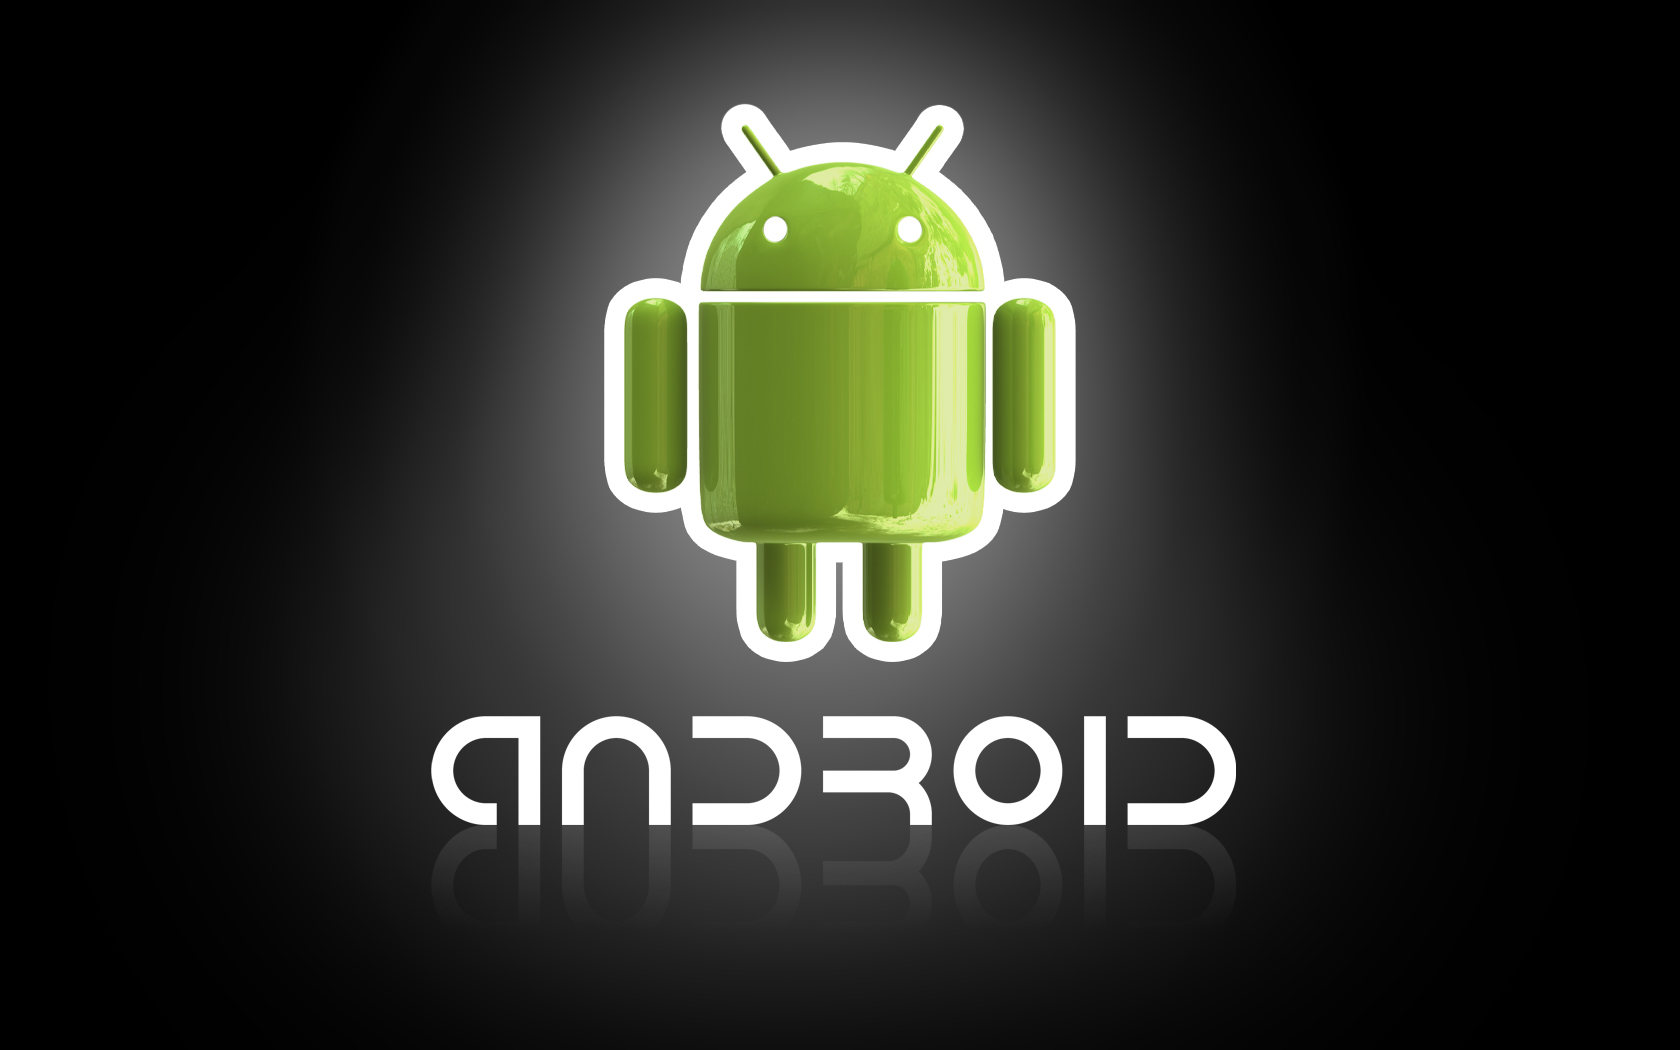 apk Application Android CrackГ©es | Jeux Android Apk CrackГ©s | crackedapkfull.com